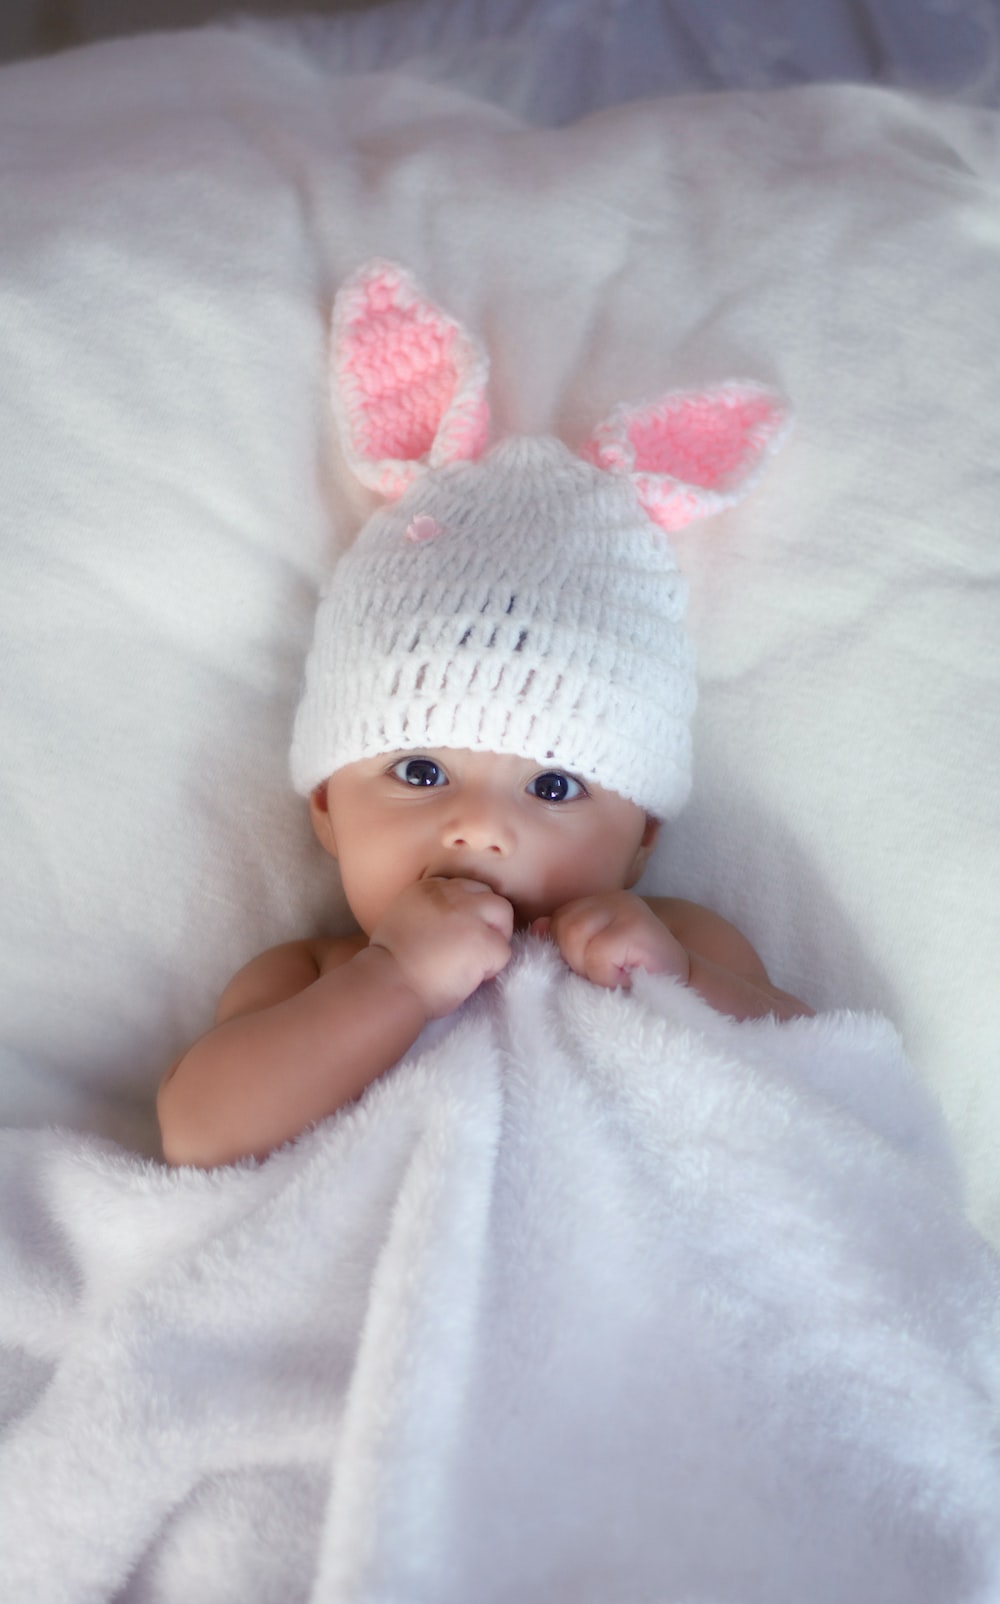 Newborn Baby Photos, Download The BEST Free Newborn Baby Stock